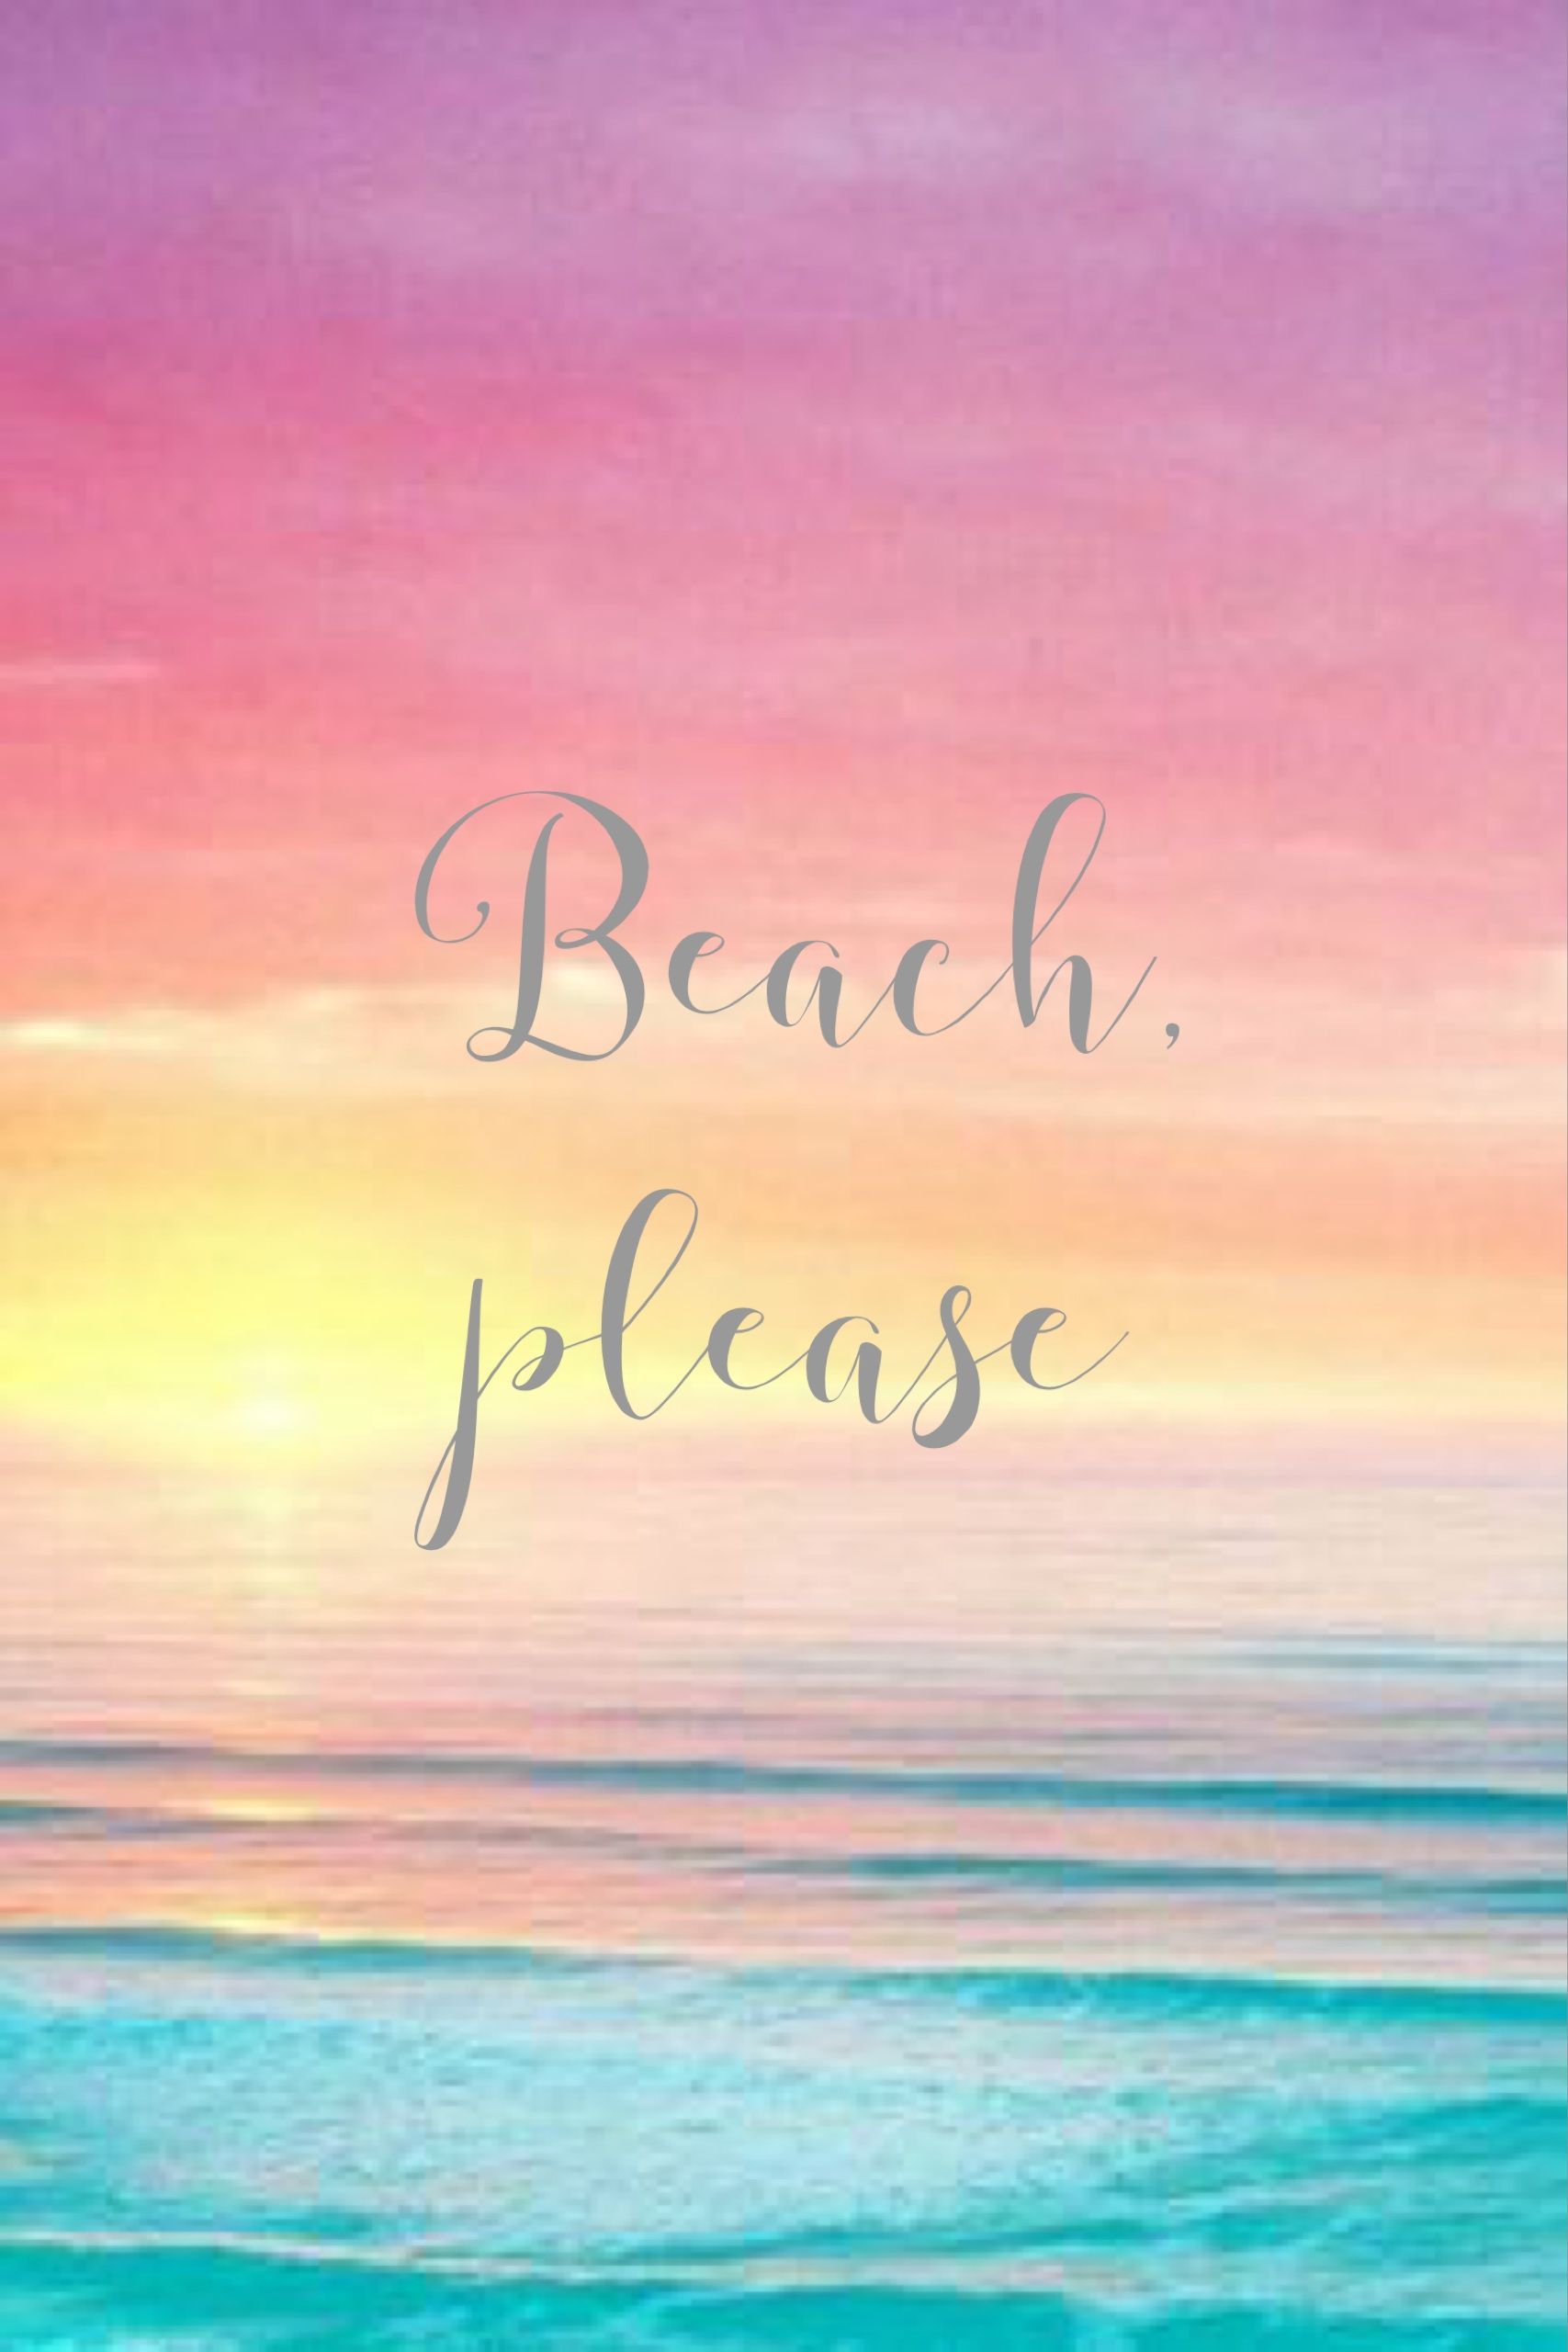 Beach, please. Summer beach quotes, Beach quotes, Summer quotes